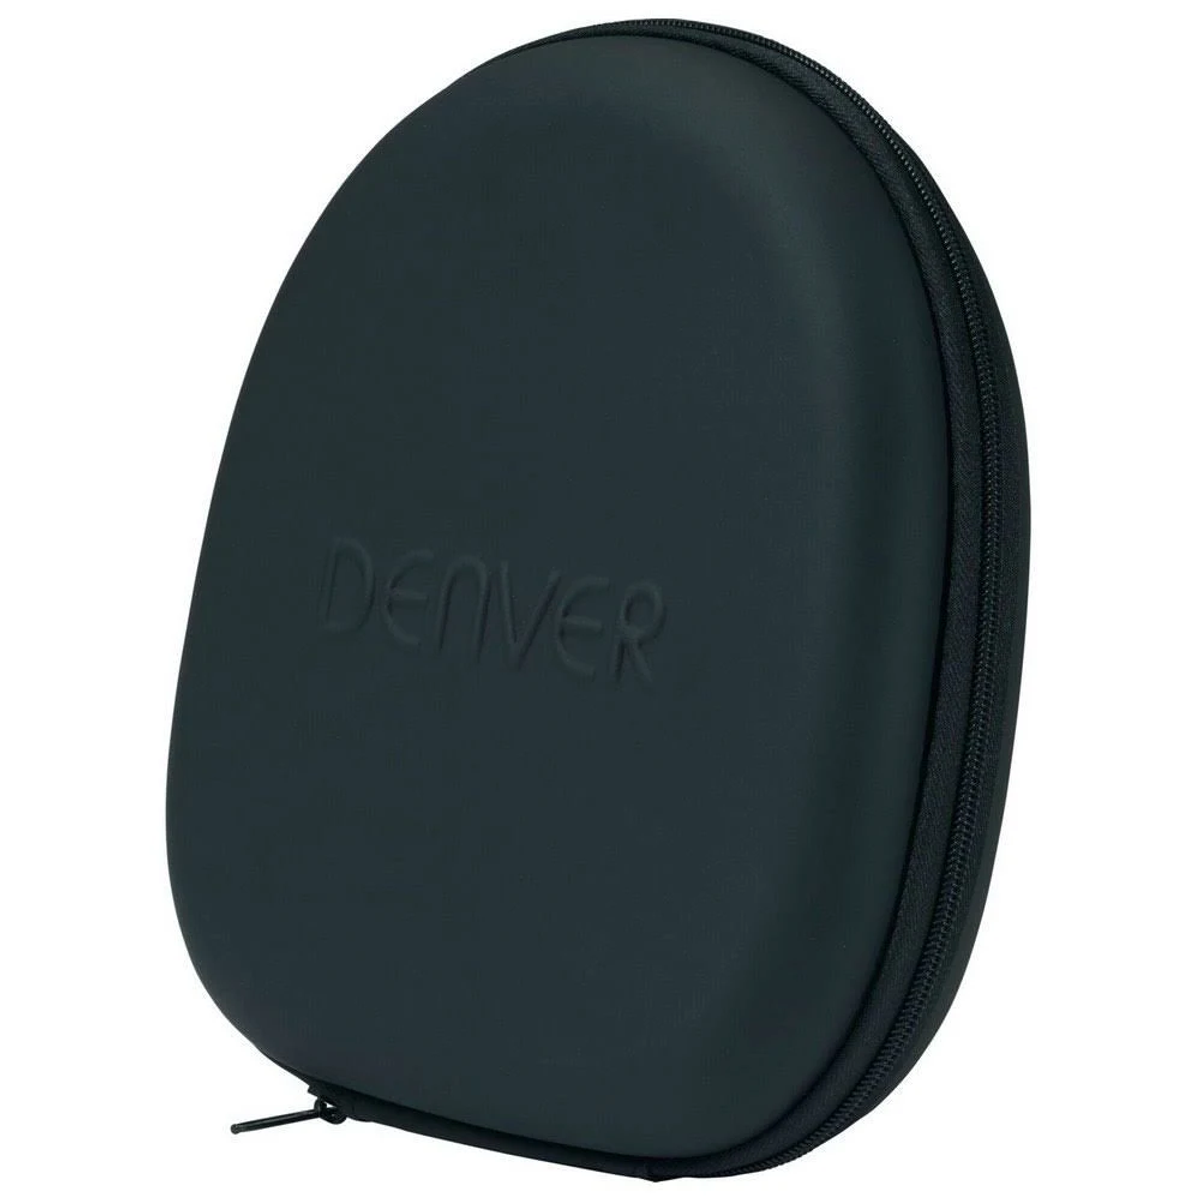 BTN207SILVER, ELECTRONICS Bluetooth Creme Over-ear DENVER Kopfhörer Bluetooth